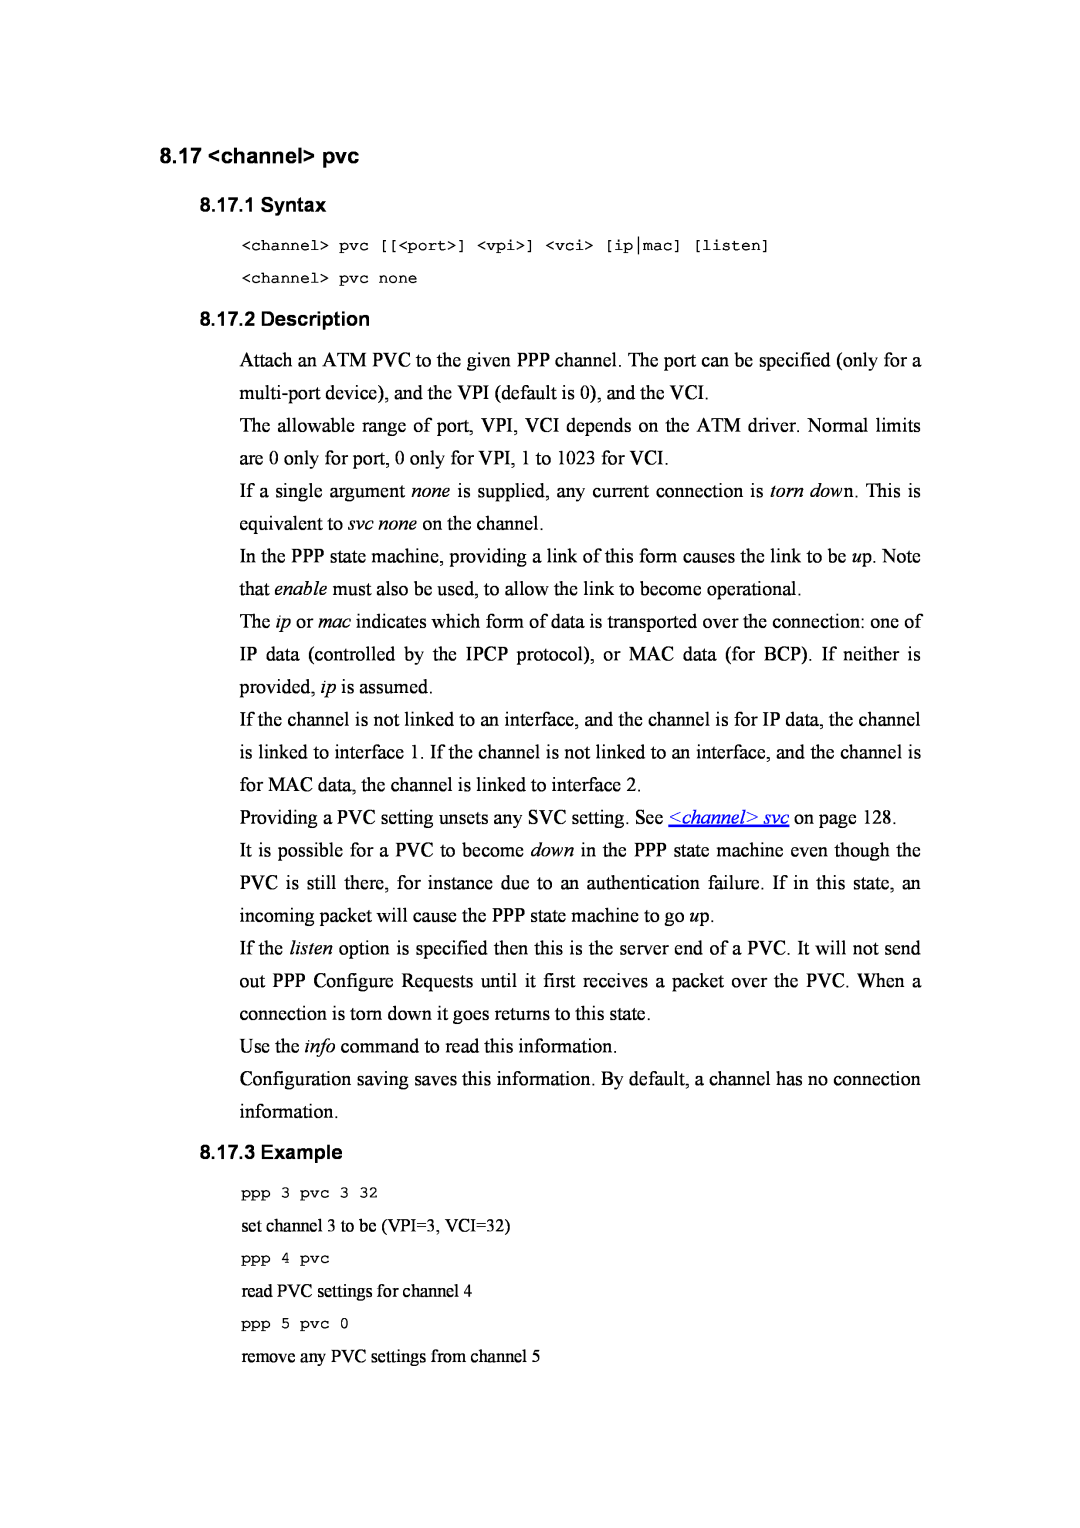 Atlantis Land A02-RA(Atmos)_ME01 manual channel pvc, Syntax, Description, Example 